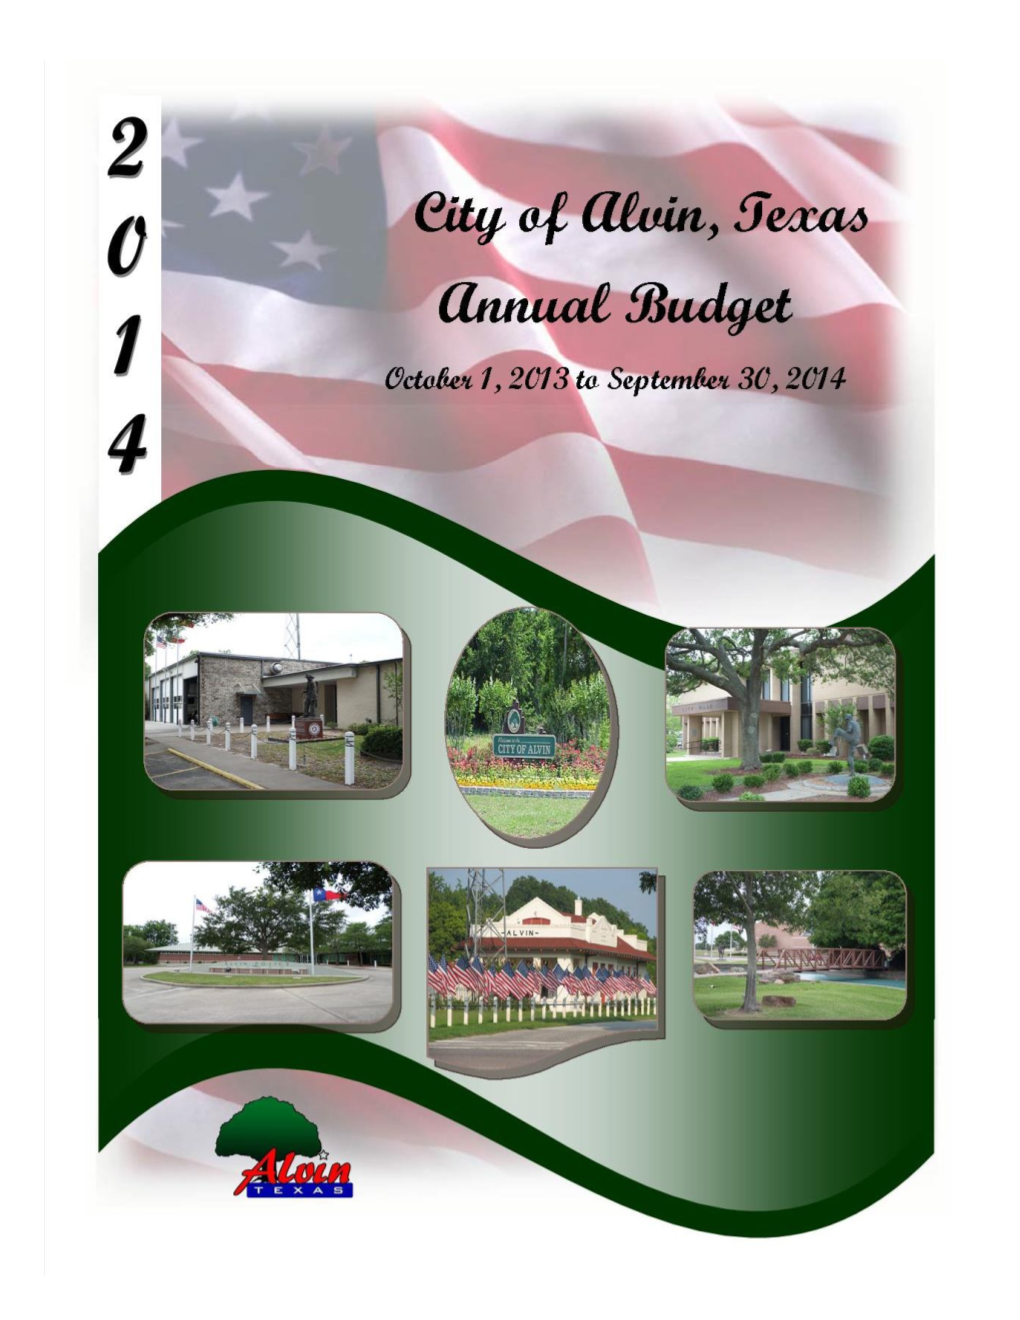 City of Alvin, Texas - Annual Budget 2013/2014 I